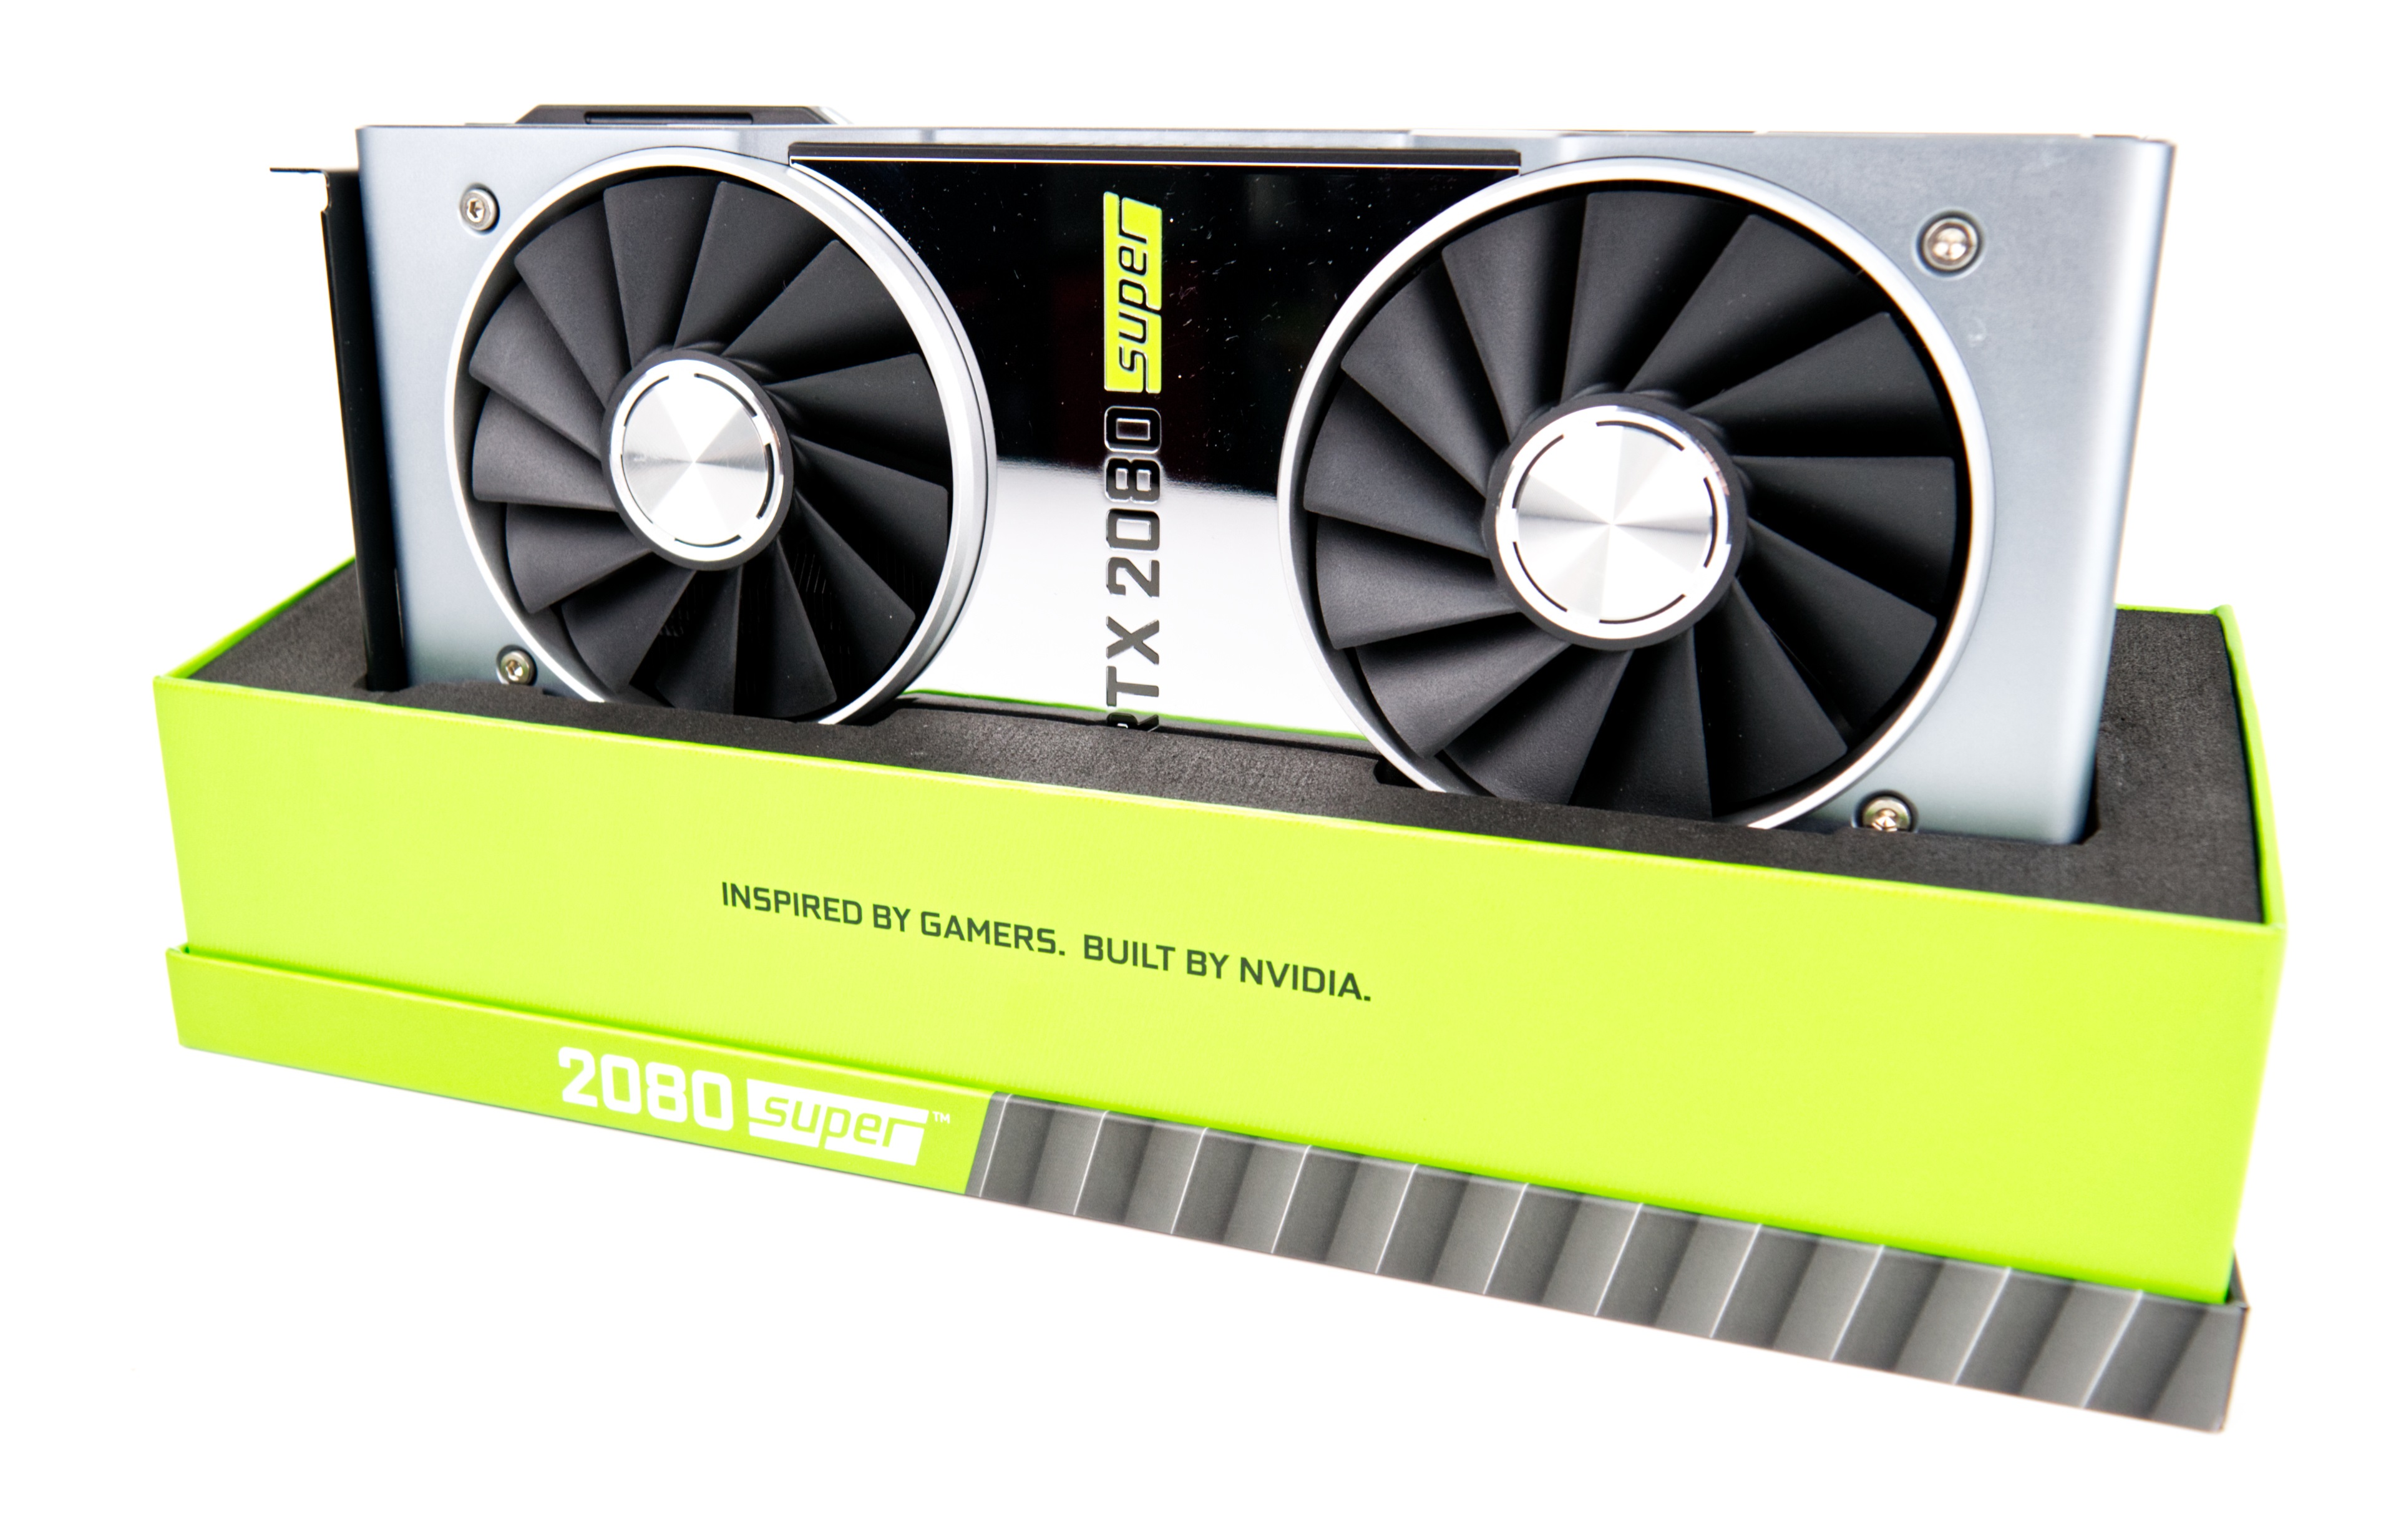 NVIDIA RTX 2080 Desktop GPU Review: A high-end Desktop GPU without a home - NotebookCheck.net Reviews